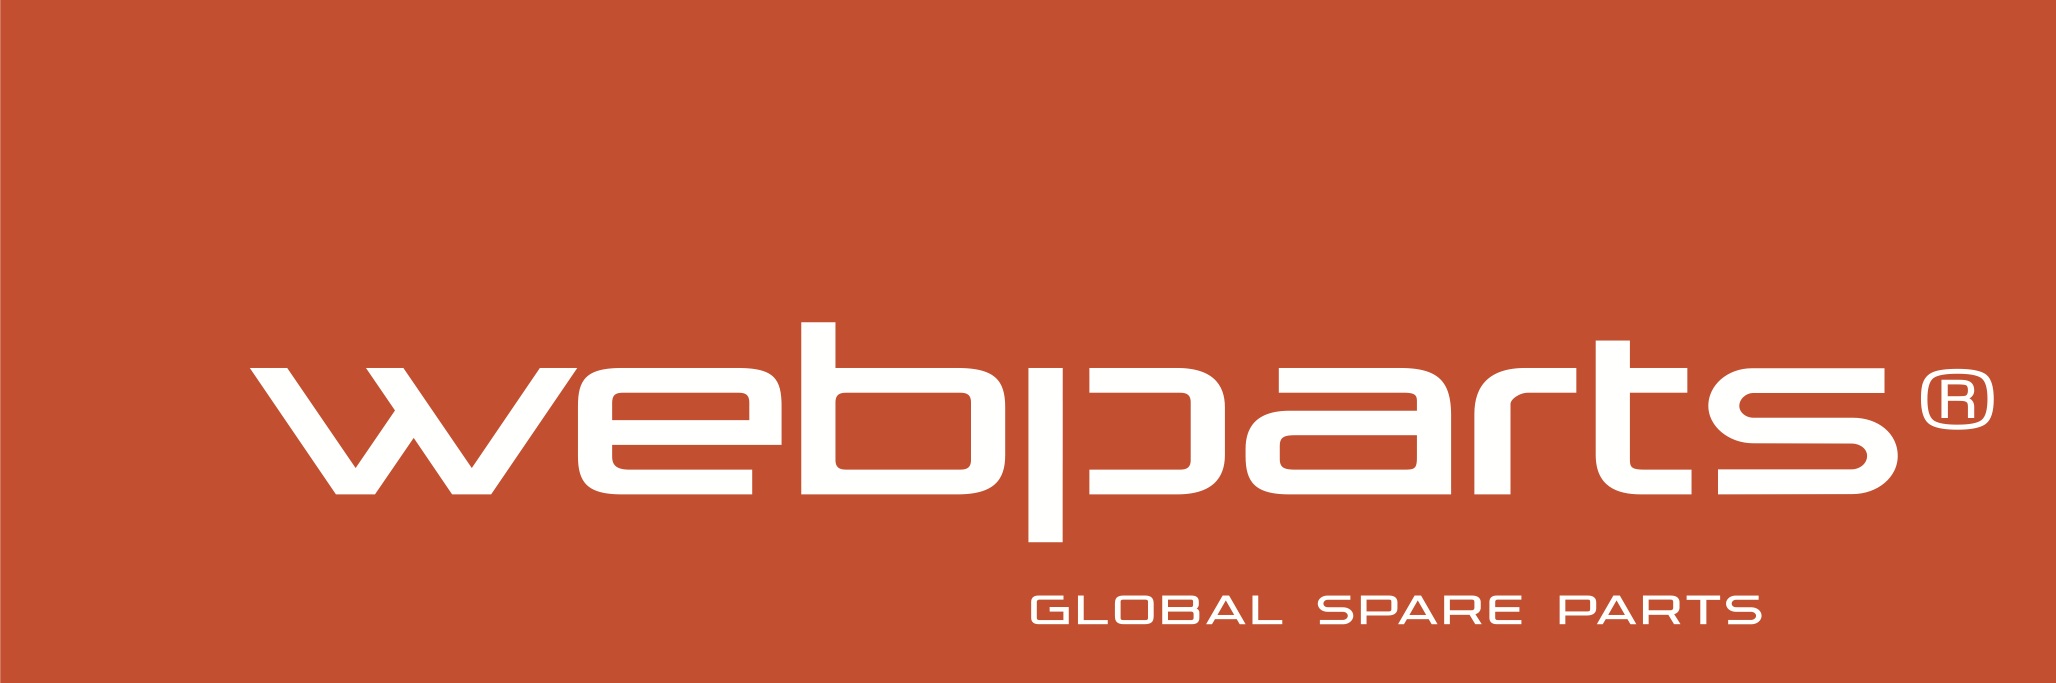 webparts logo